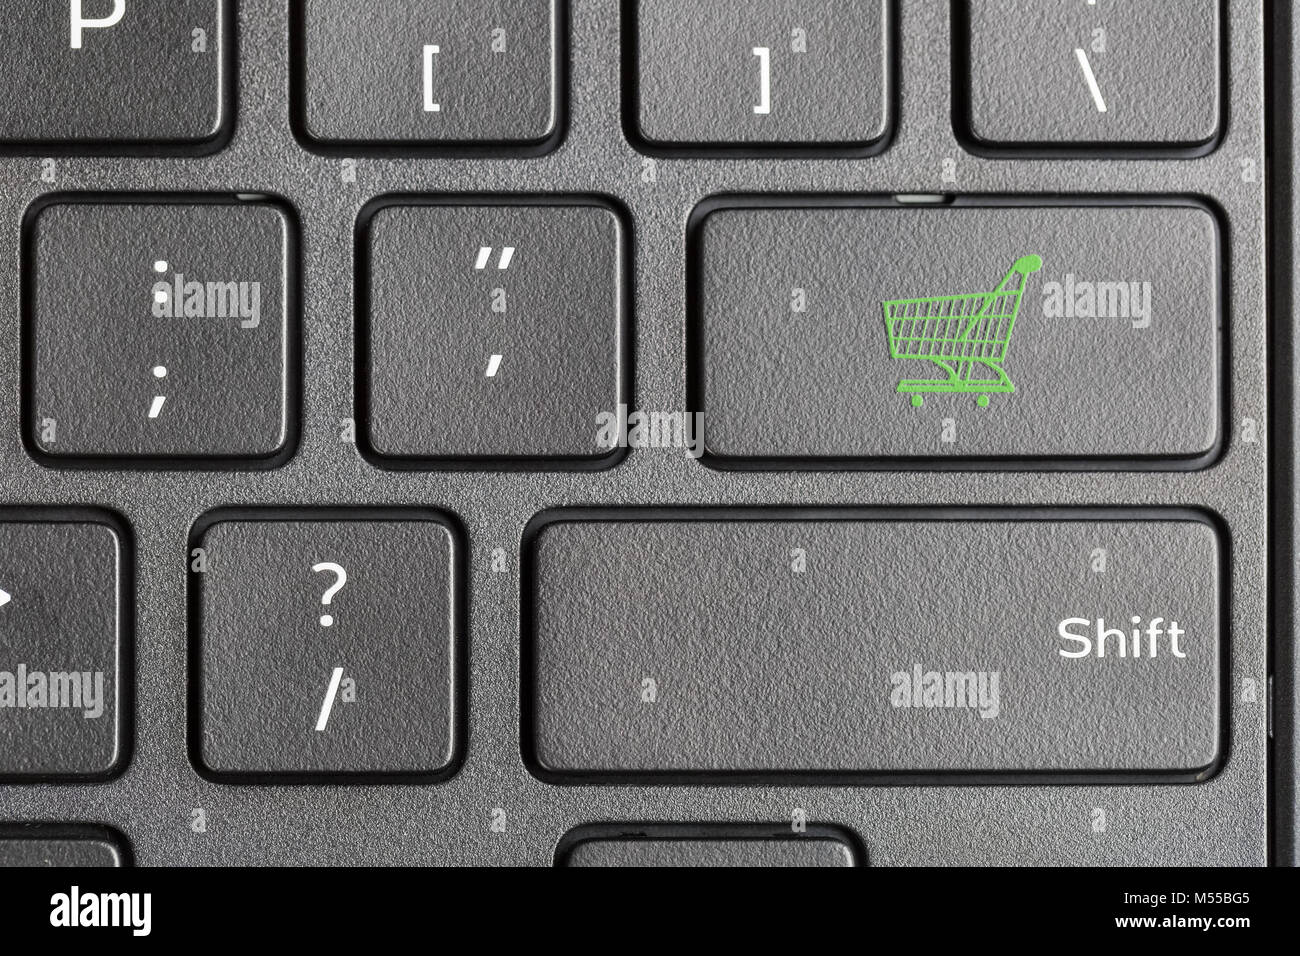 shopping cart icon on computer keyboard Stock Photo